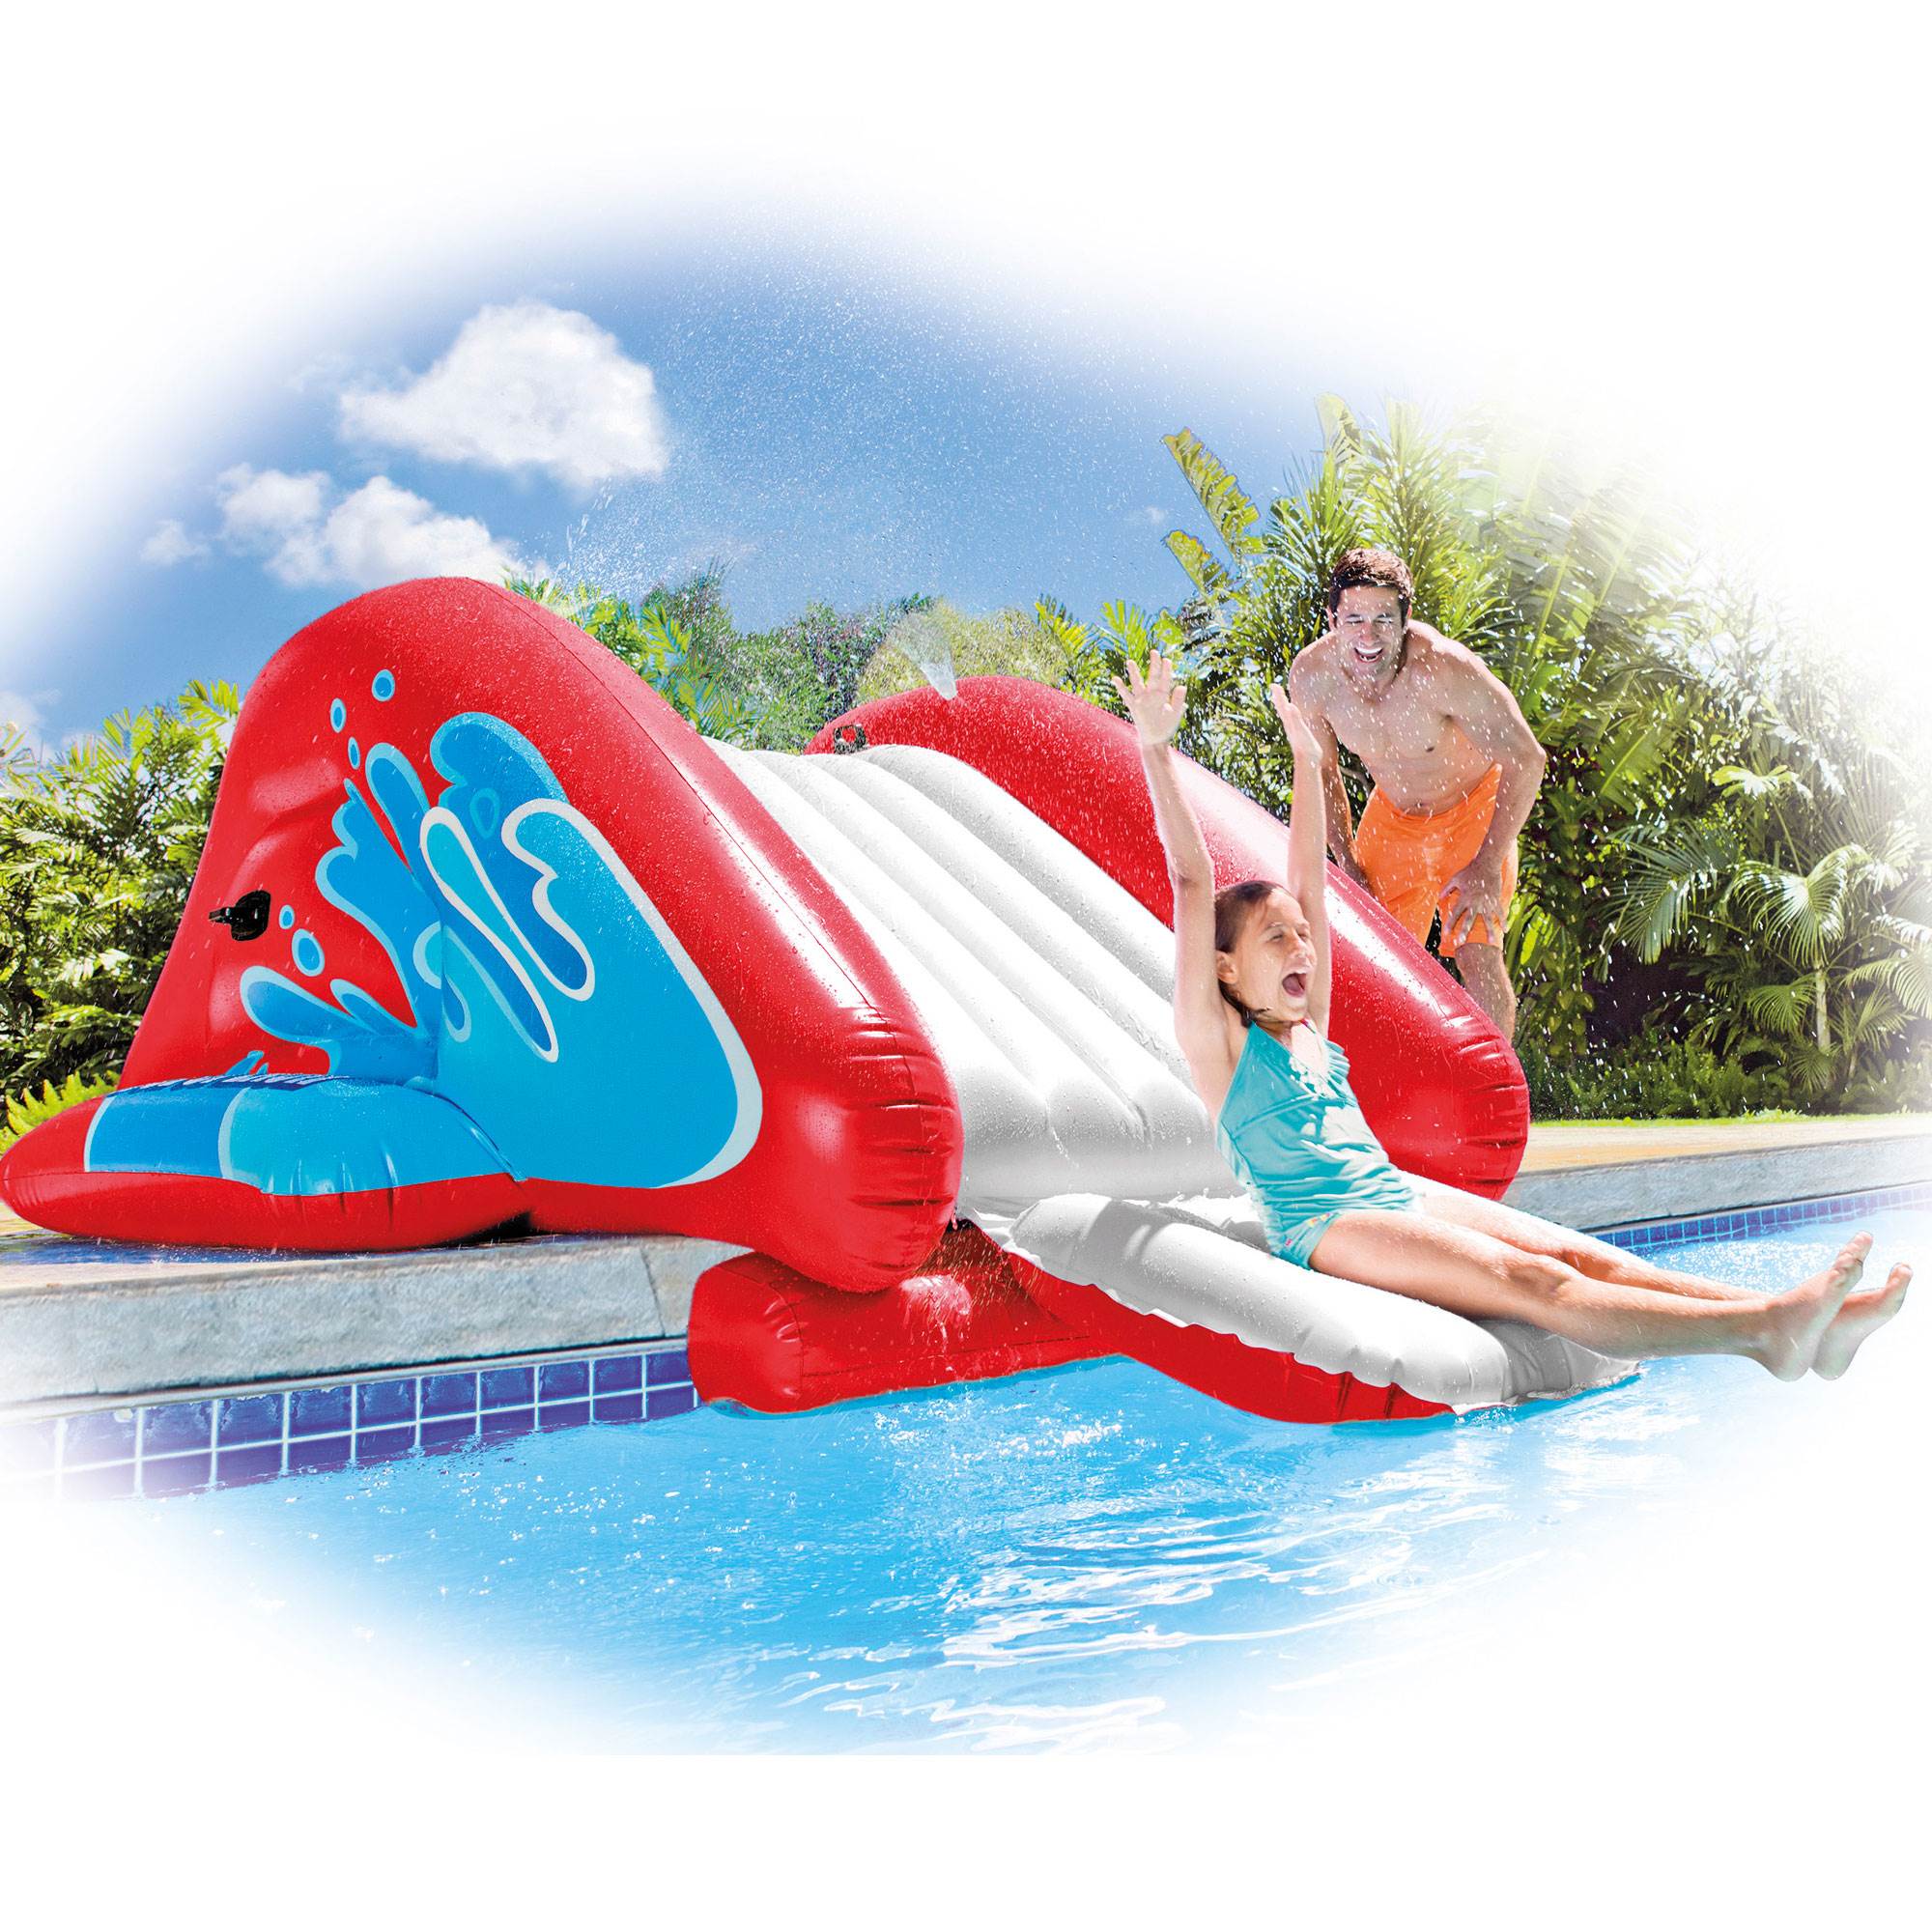 Intex Kool Splash Inflatable Pool Water Slide Play Center With Sprayer